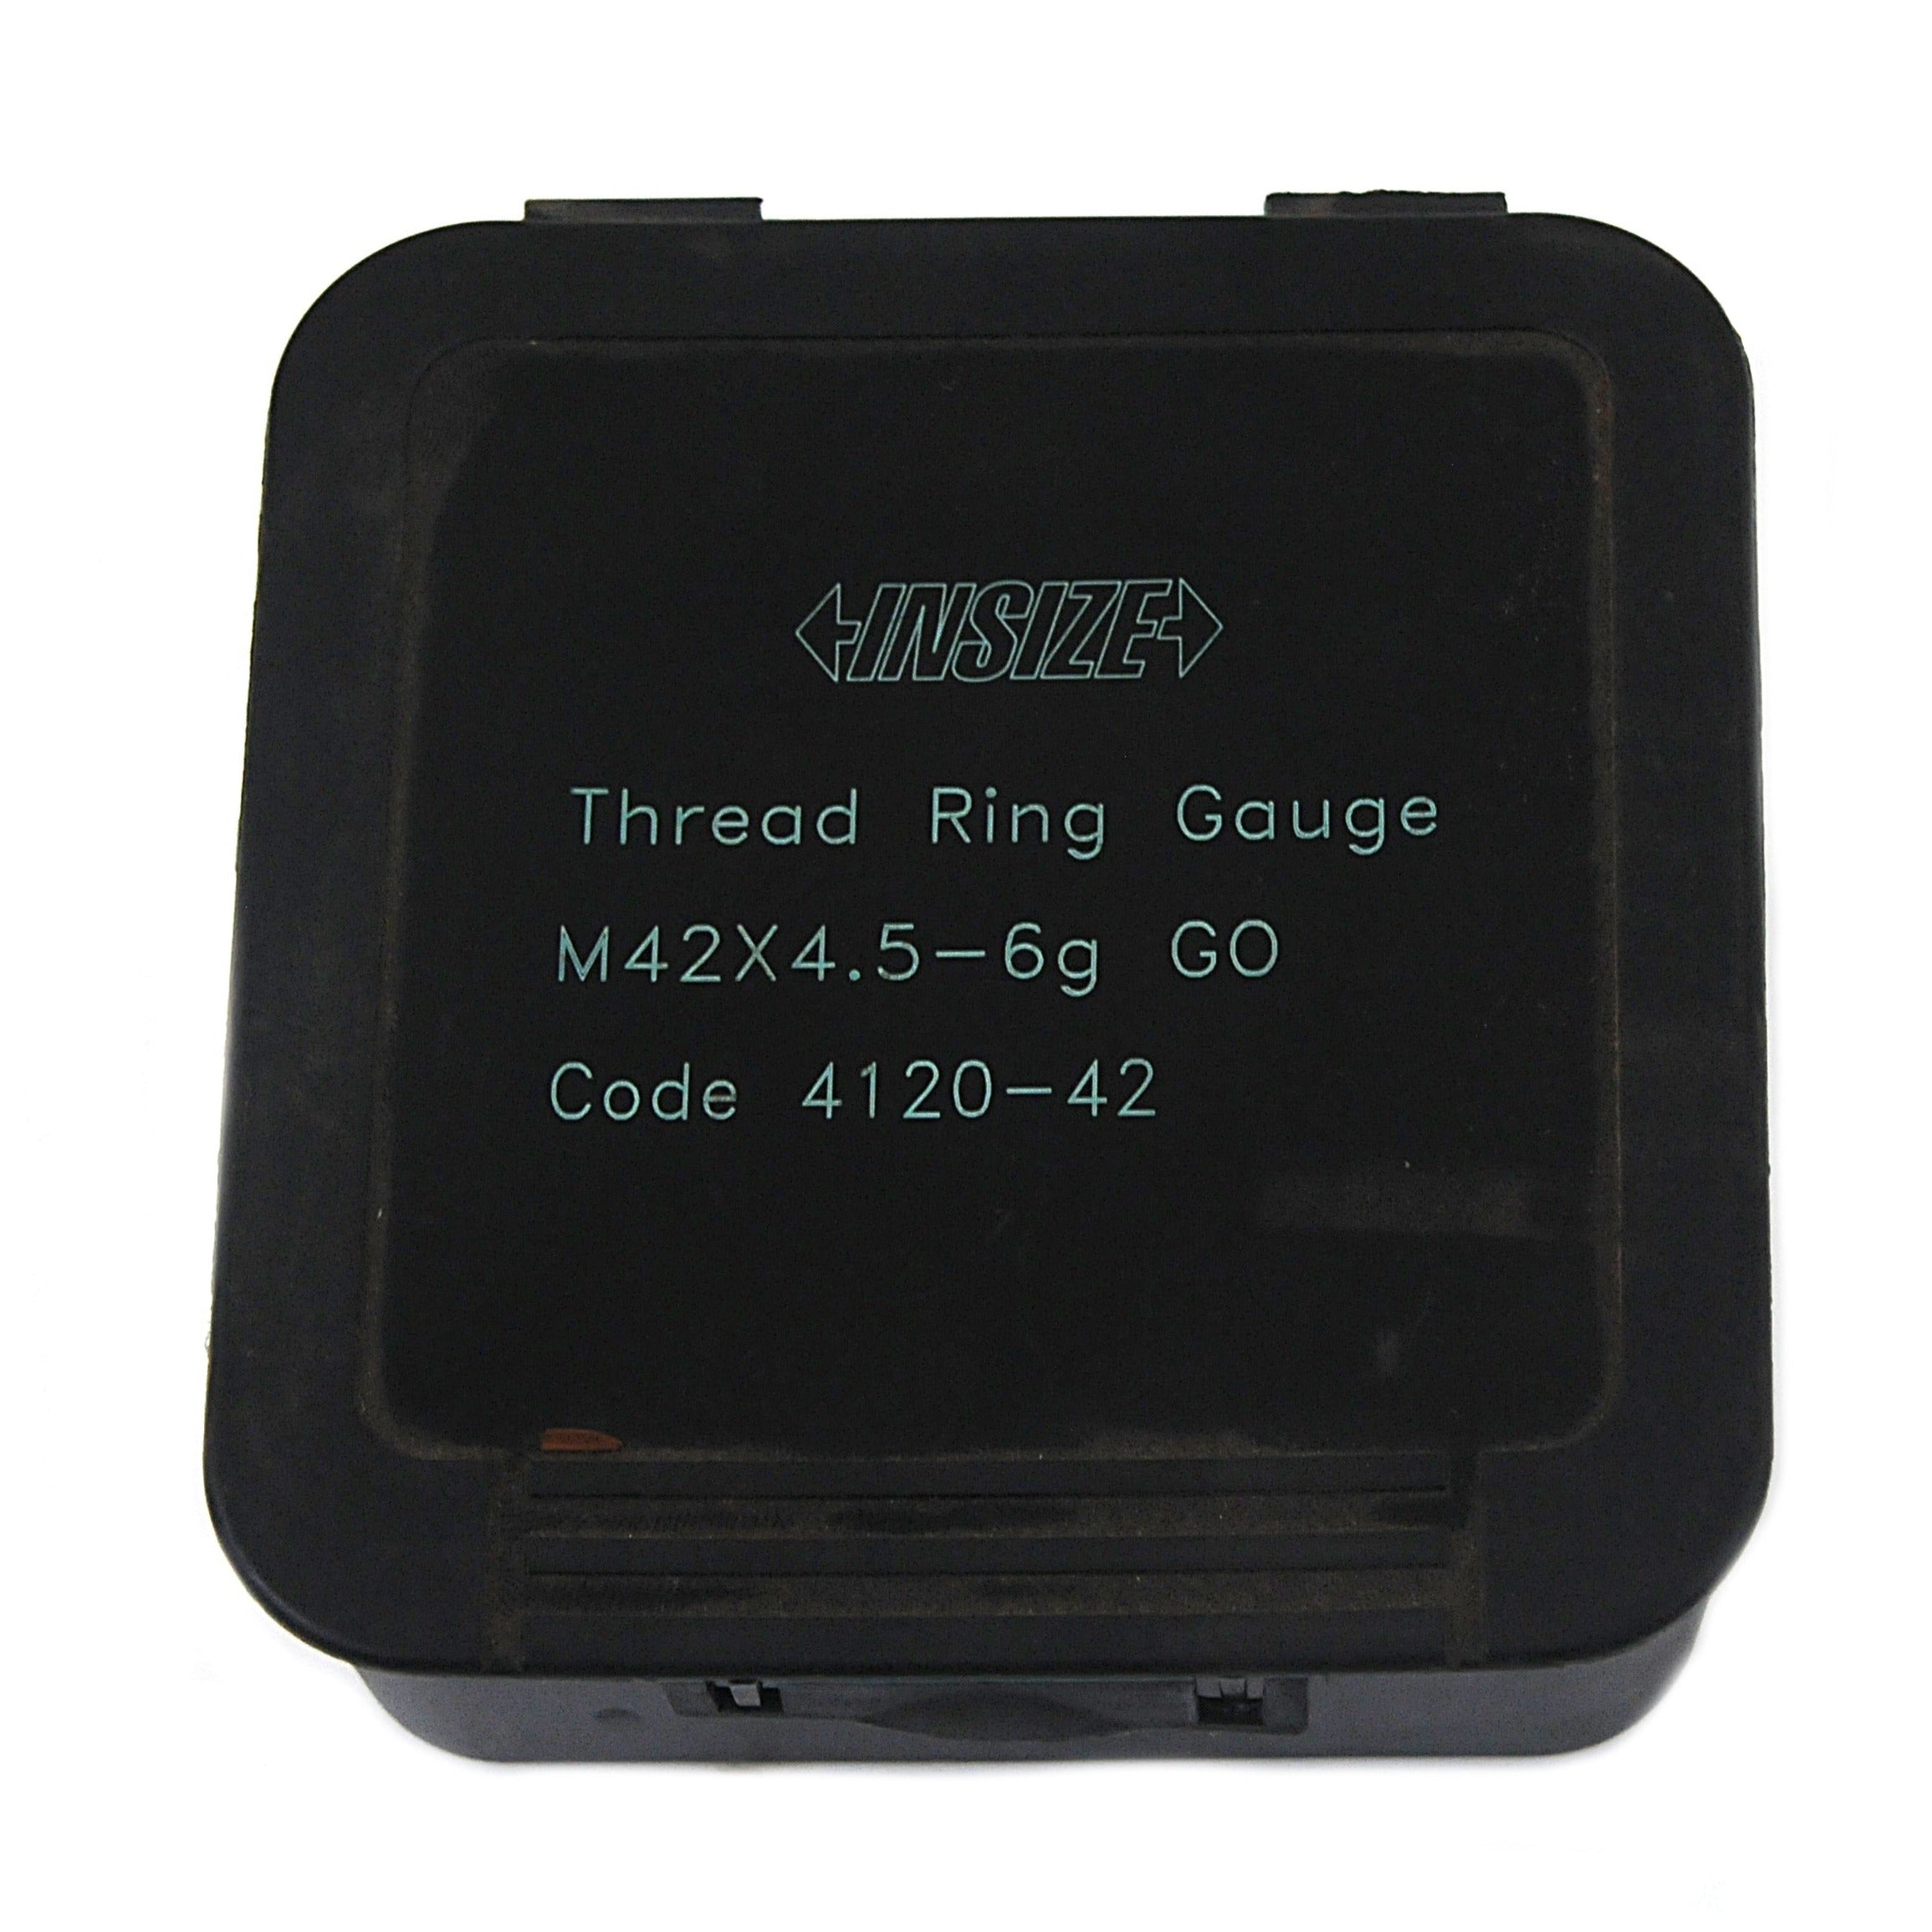 Insize GO Thread Ring Gauge M42X4.5 Series 4120-42